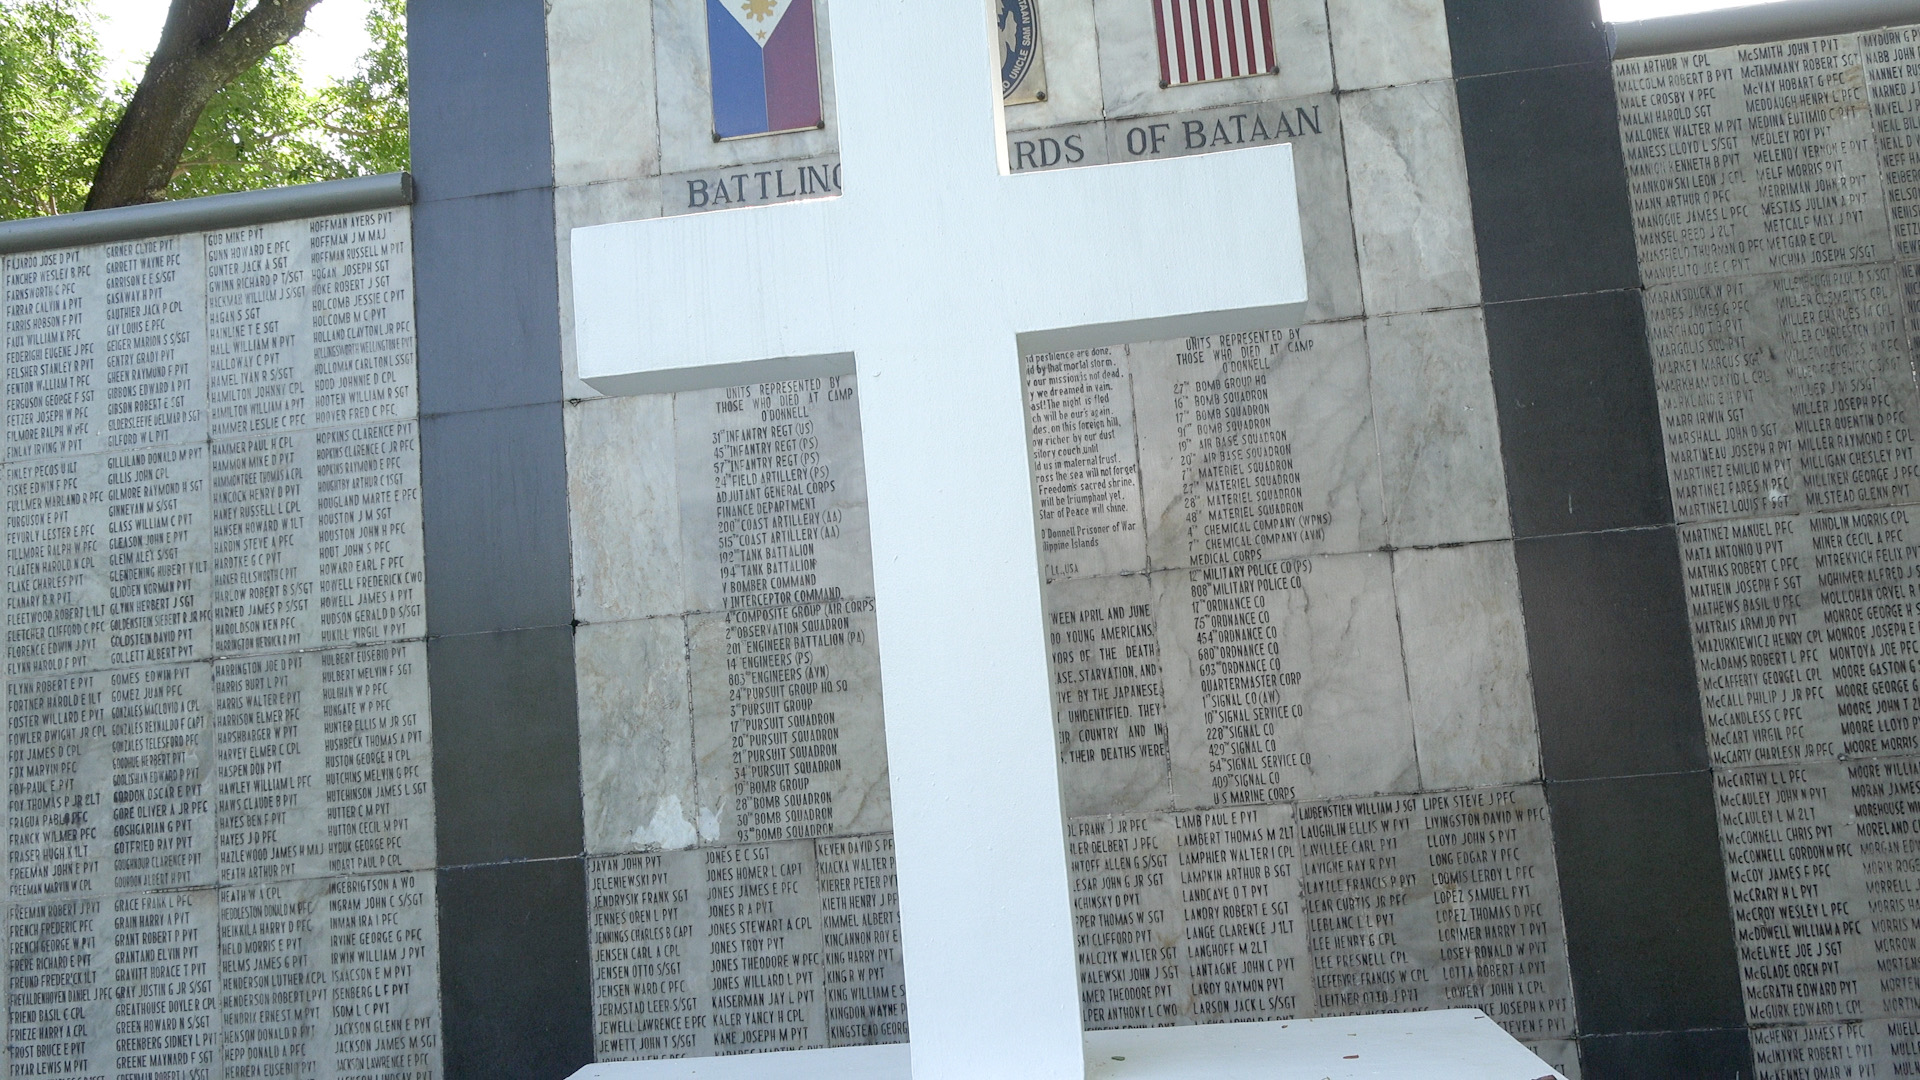 Sack of Cement Cross at Capas National Shrine (Replica)